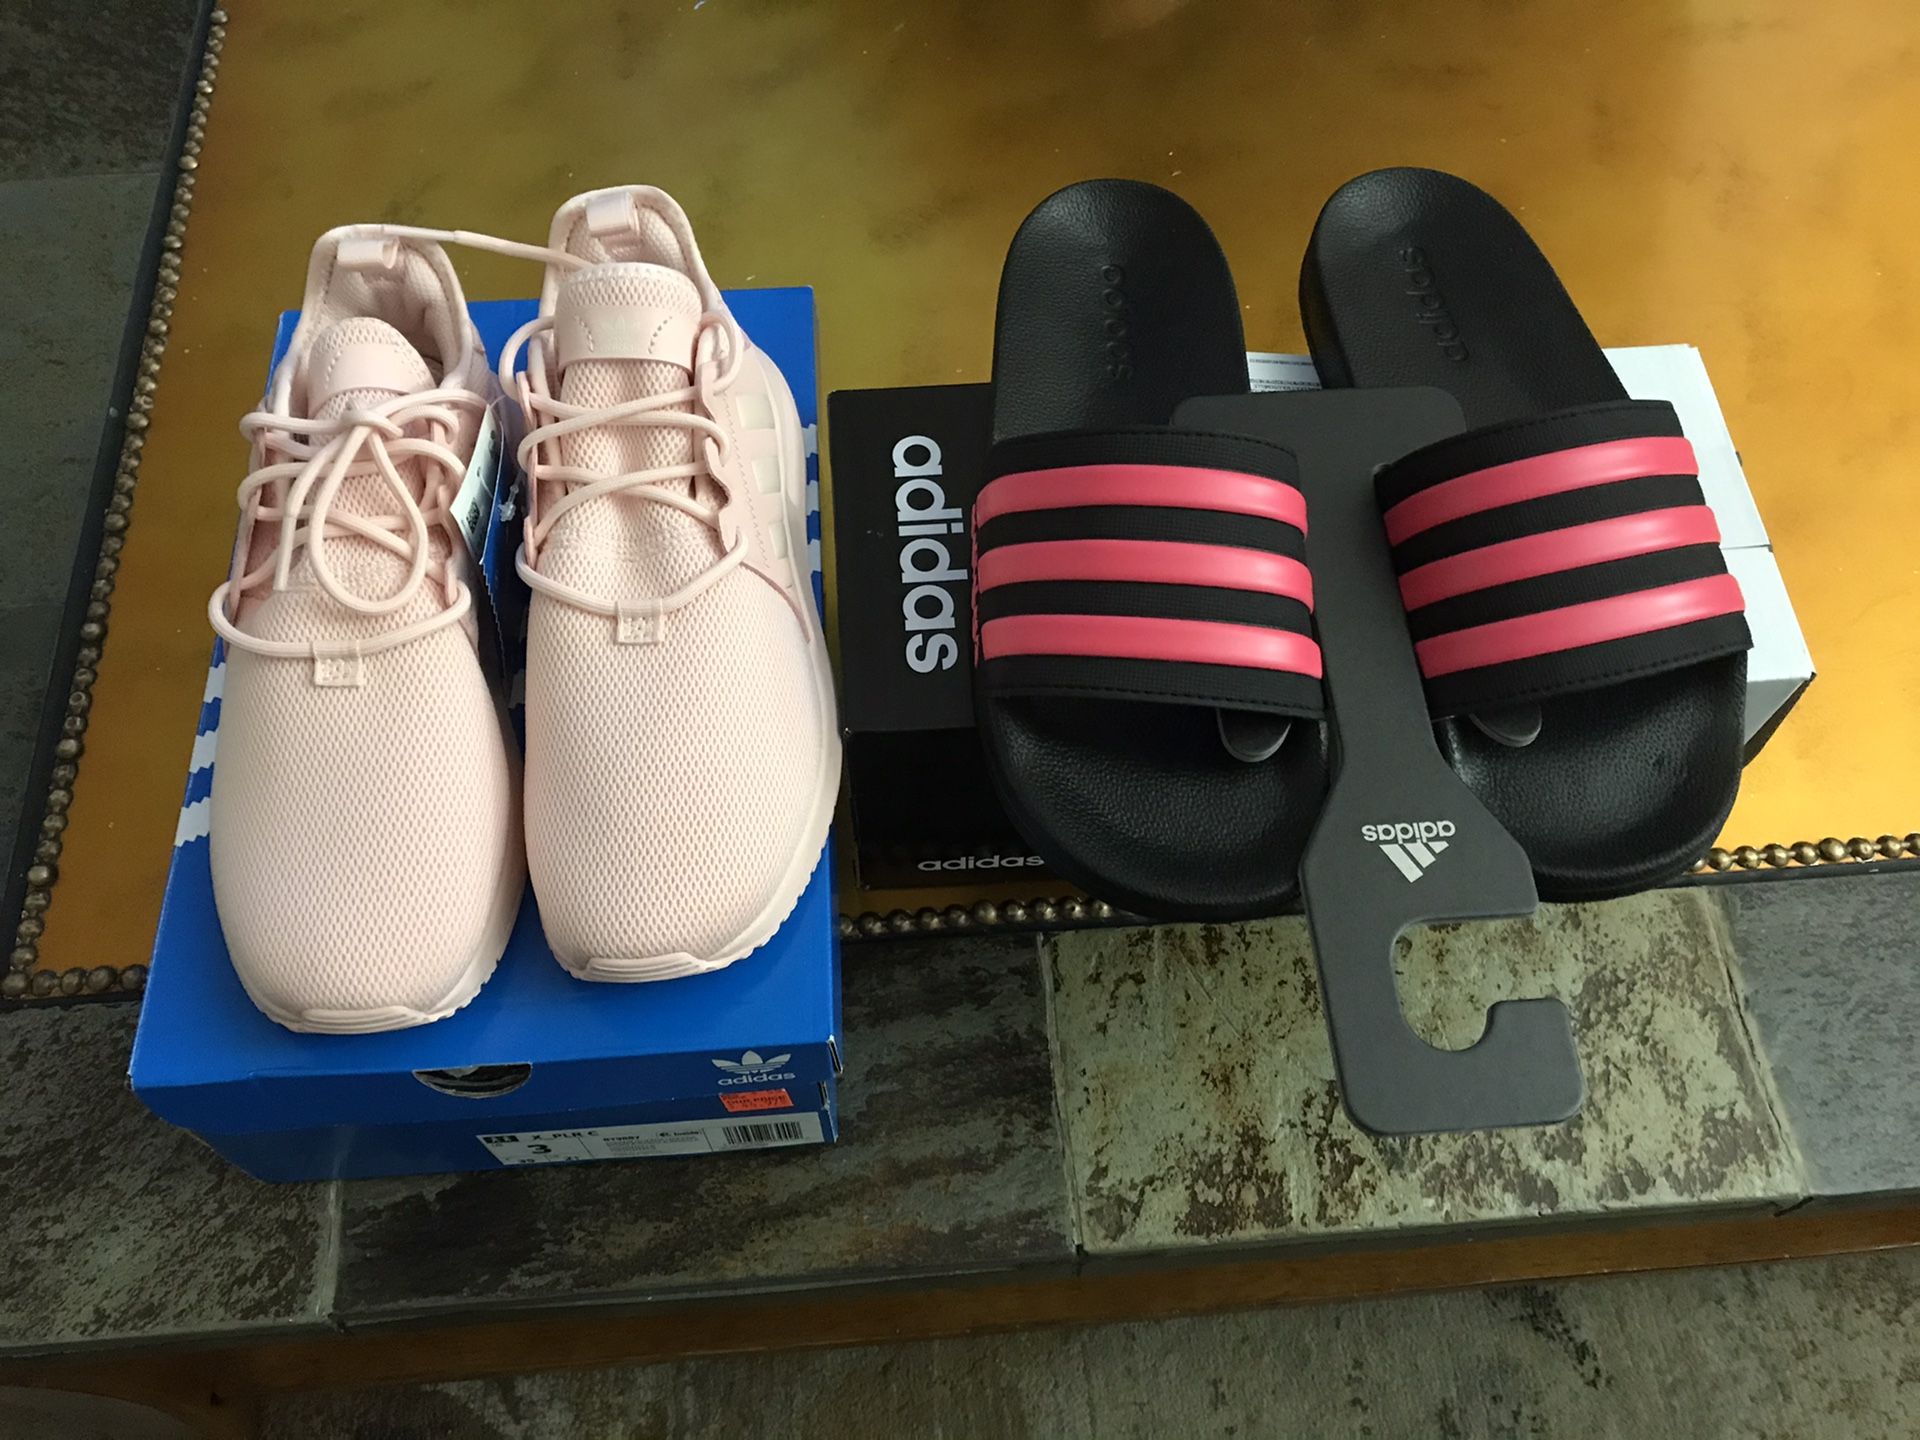 Adidas x-per shoes size 3 & Adidas Adilette Shower K size 6 BUNDLE